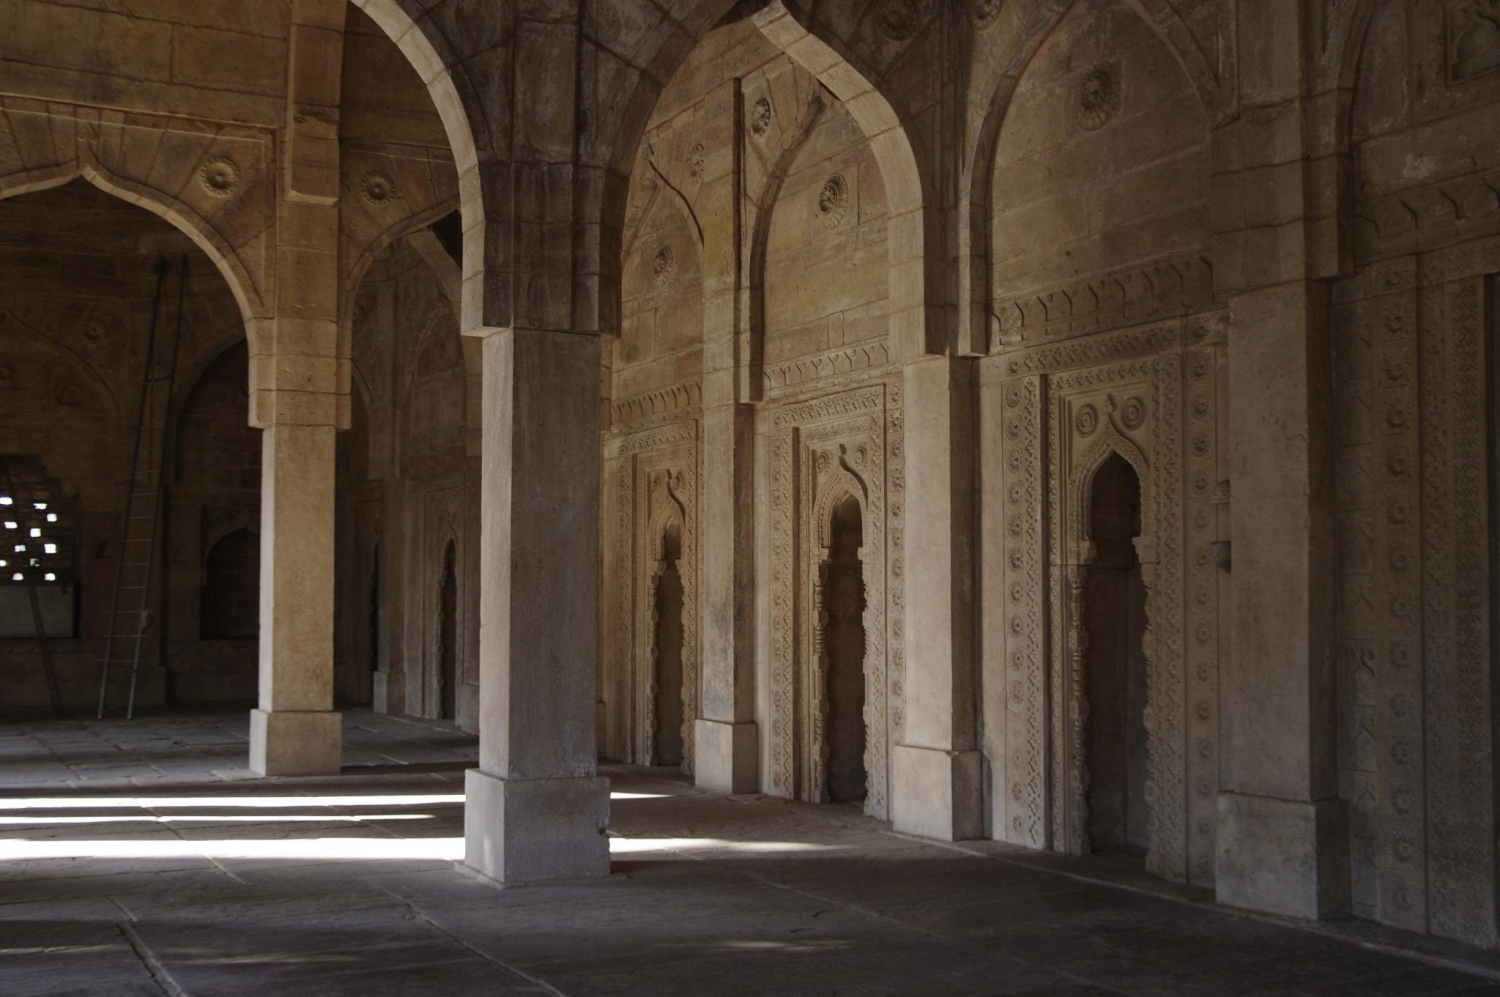 Interior view, prayer hall, mihrabs at right